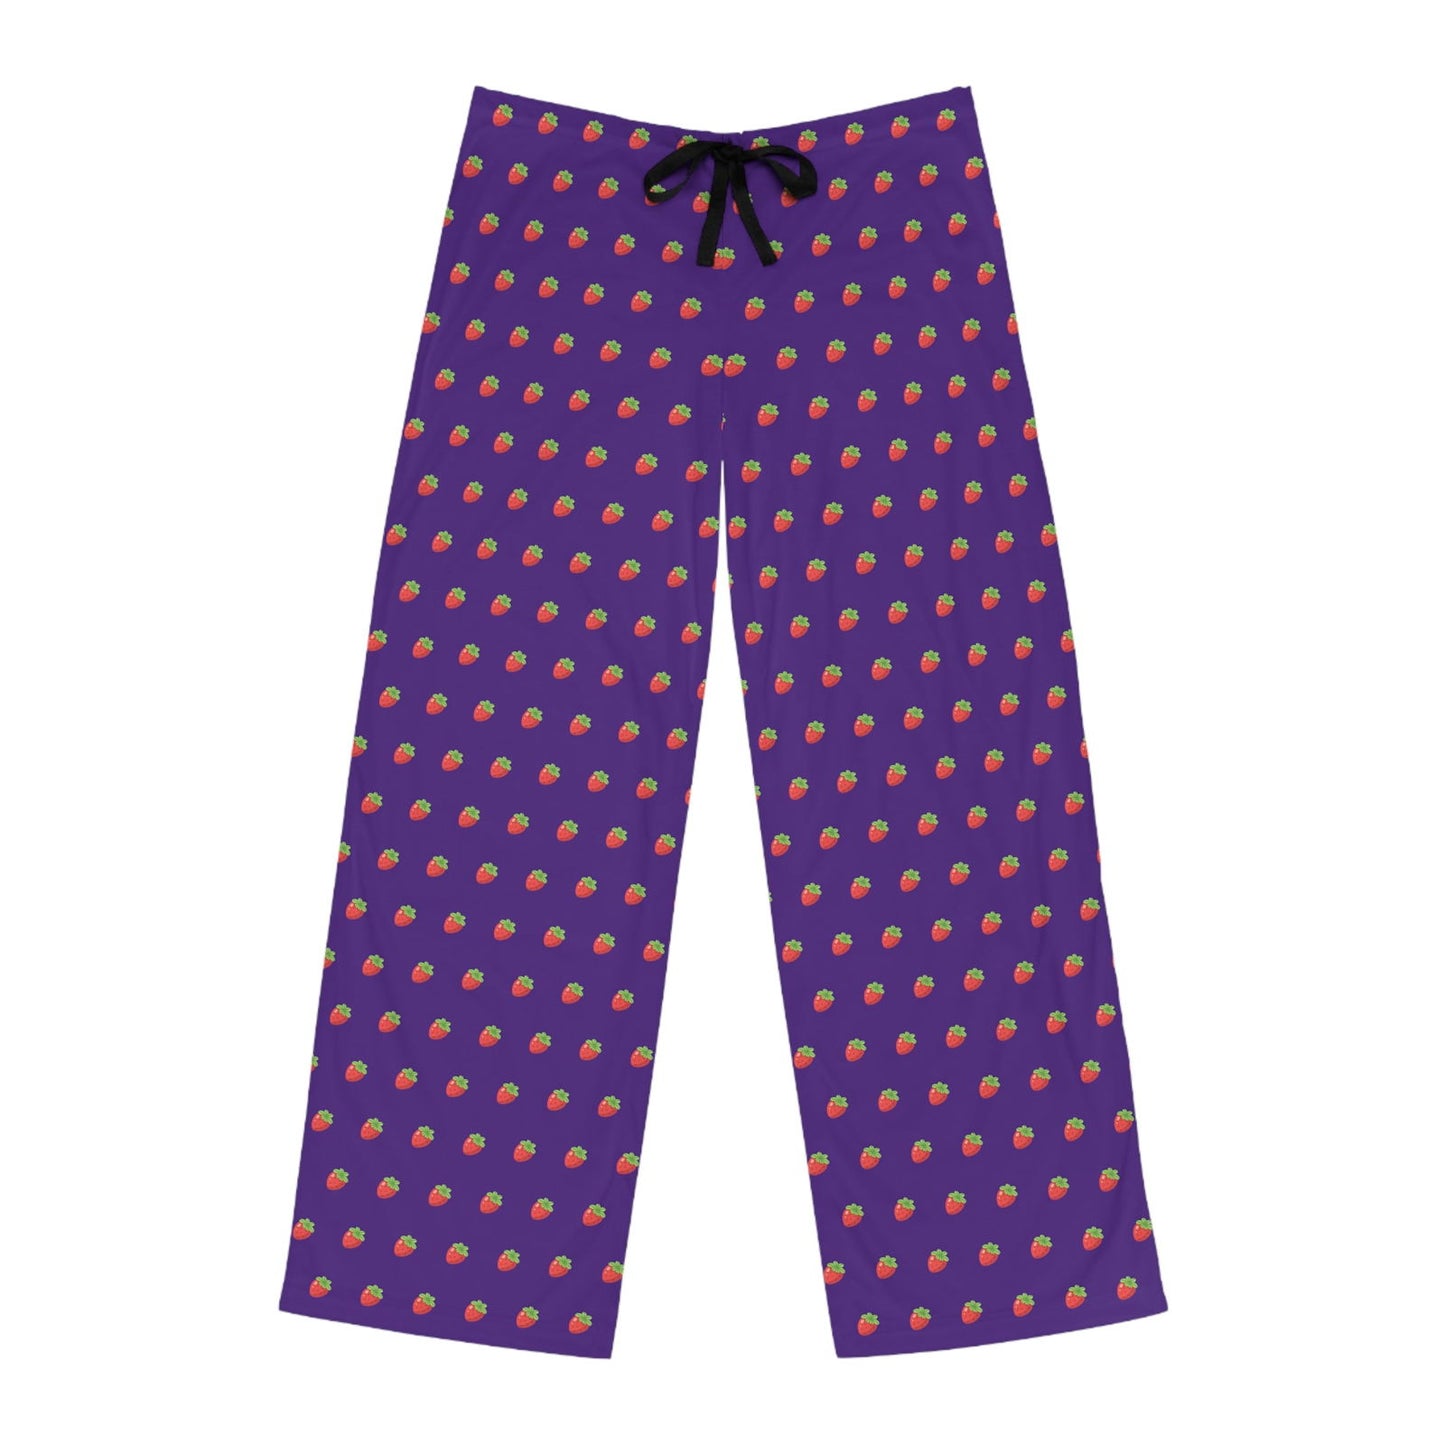 Unisex pajamas - Strawberries pattern - Alex's Store -  - 